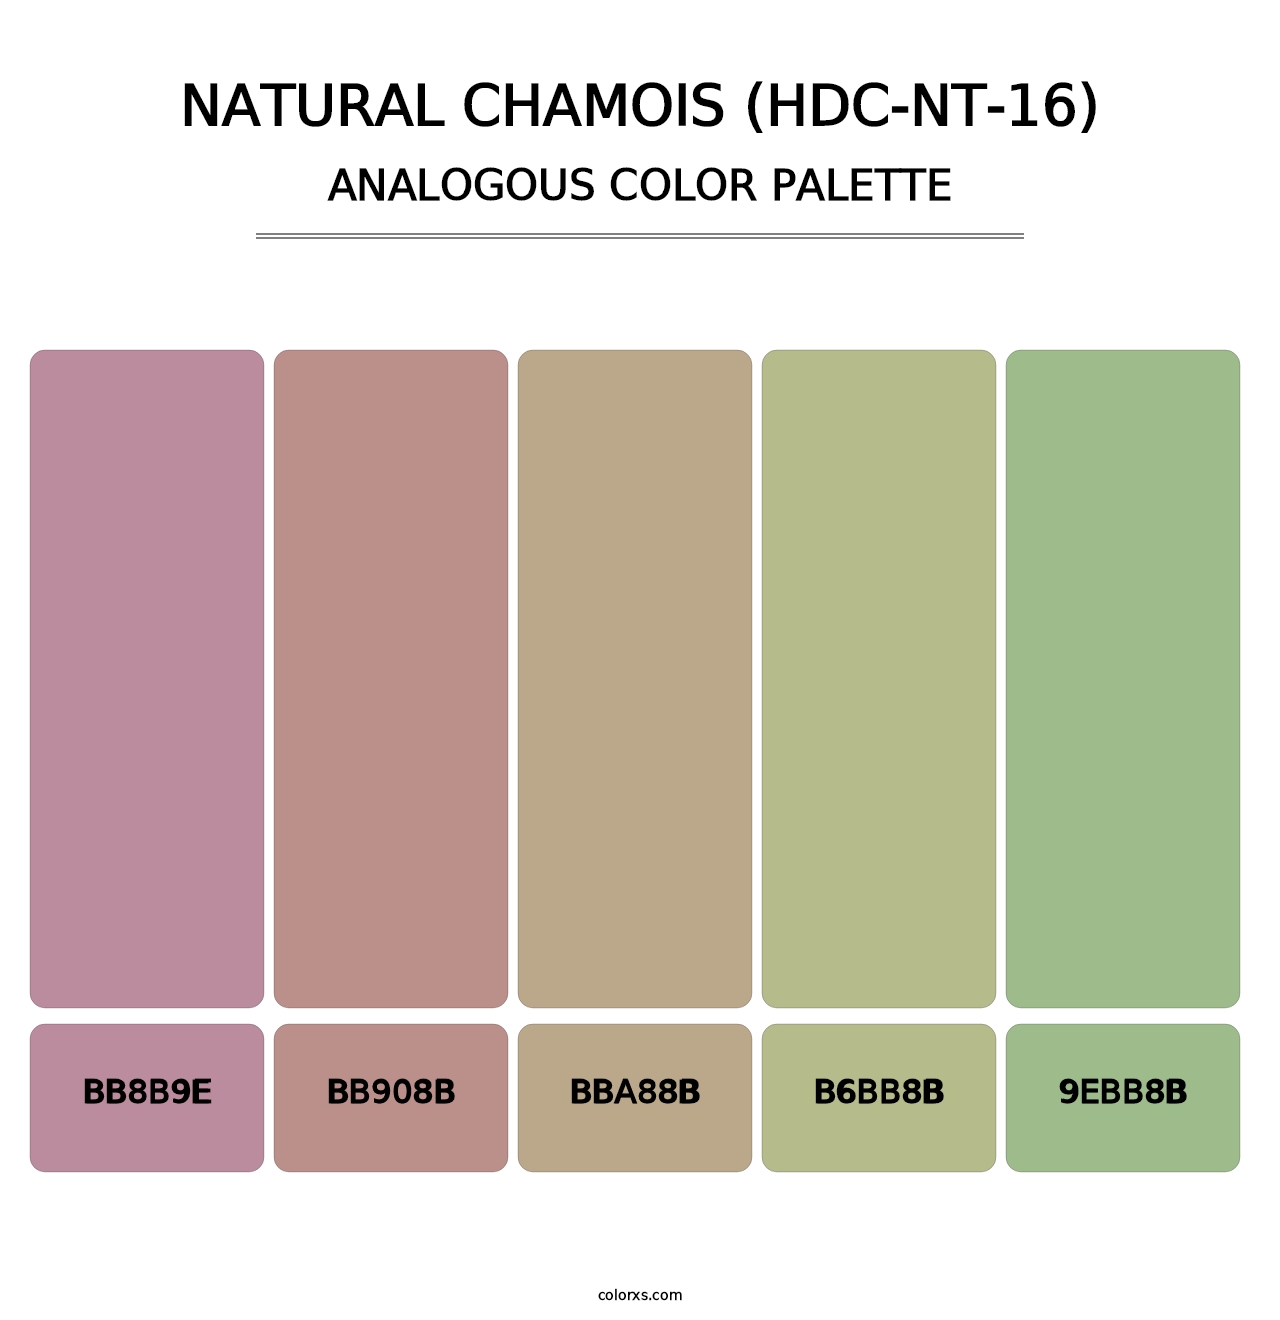 Natural Chamois (HDC-NT-16) - Analogous Color Palette